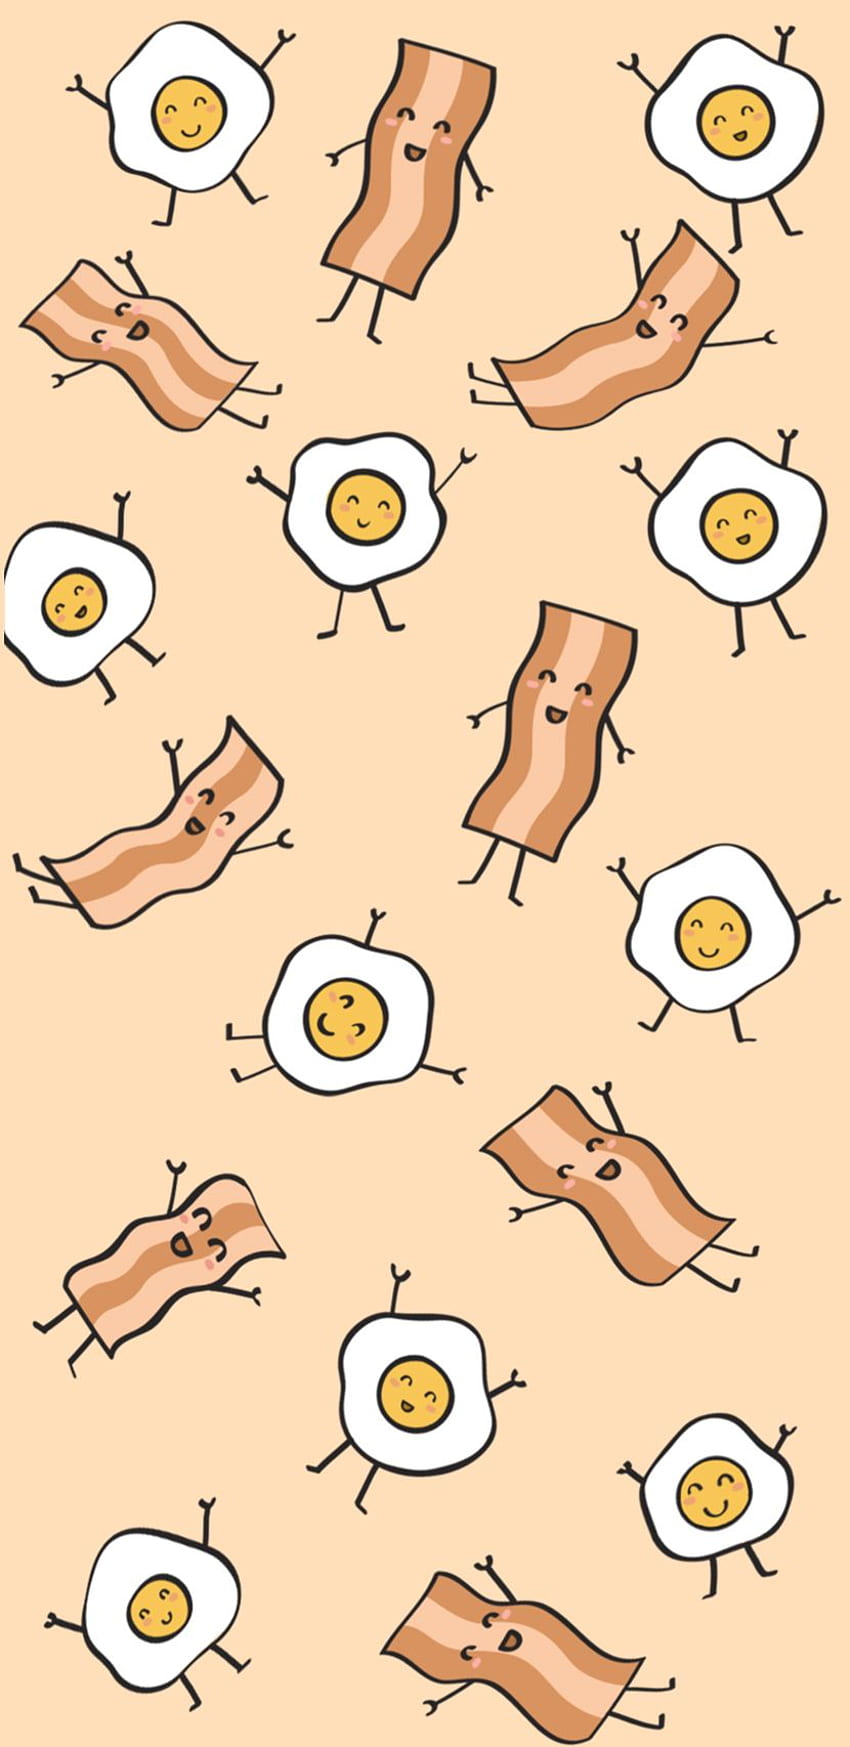 Bacon Wallpaper Images  Free Download on Freepik